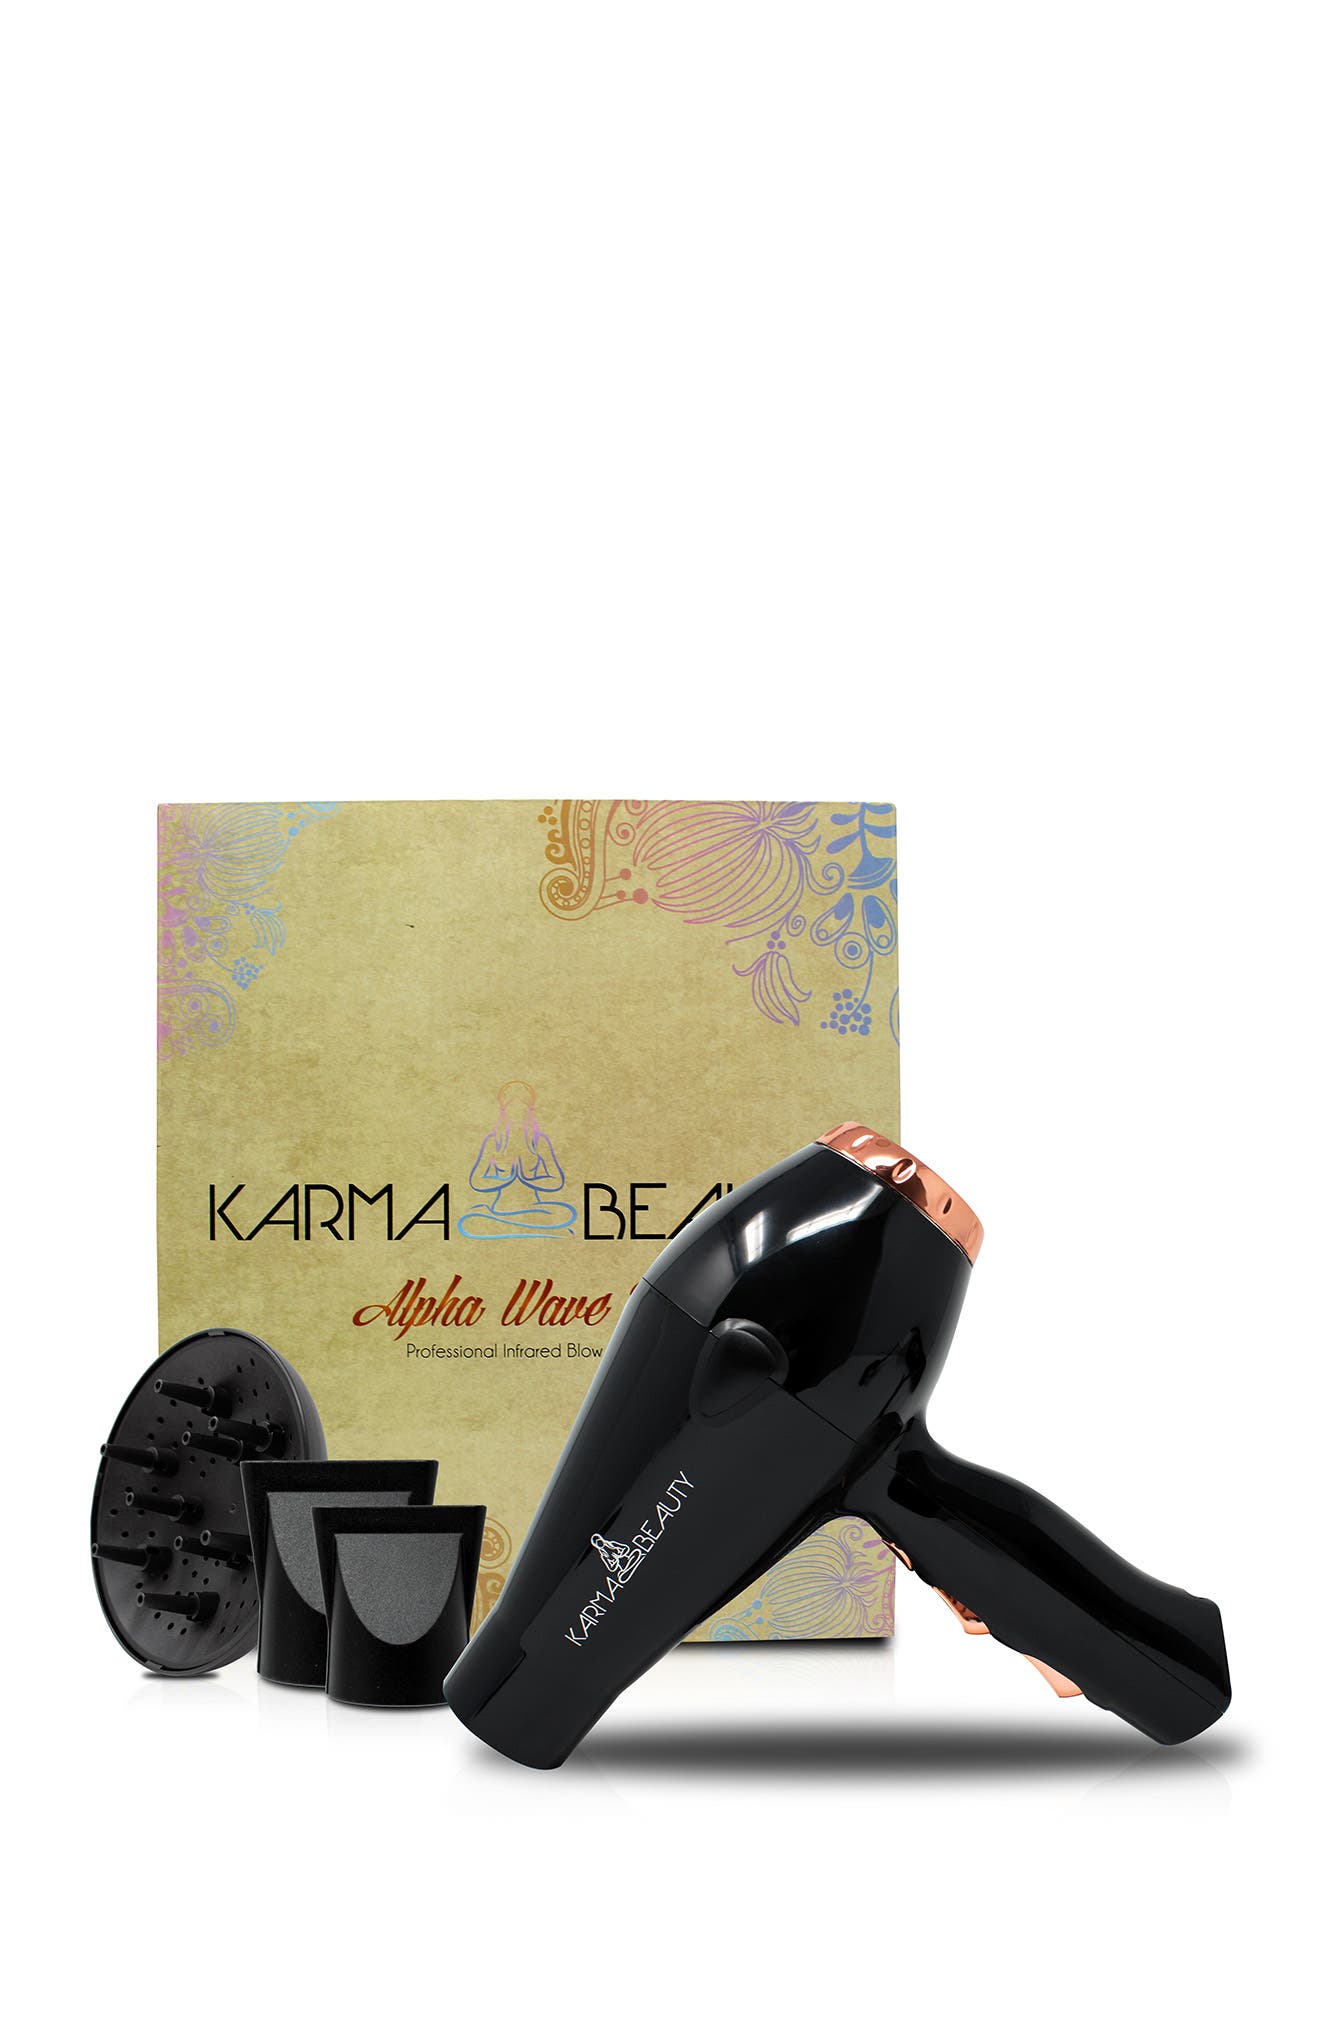 Karma Beauty Alpha Wave Pro Black Blow Dryer With Concentration Nozzles & Diffuser 4- Piece Set